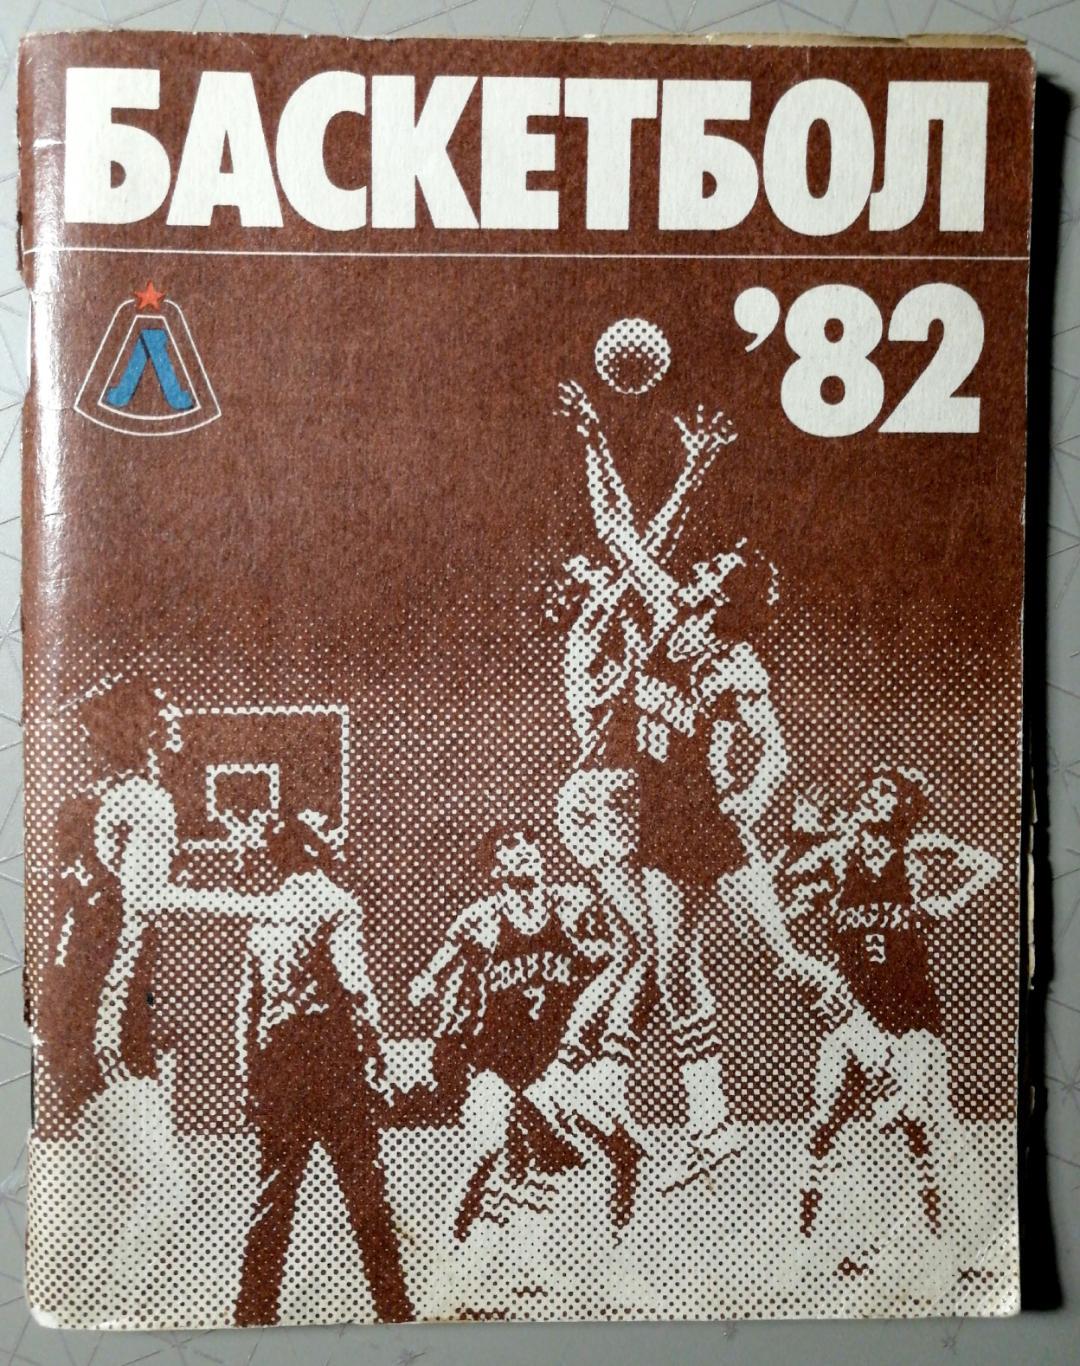 Баскетбол. Календарь-справочник. Ленинград (Лениздат) 1982